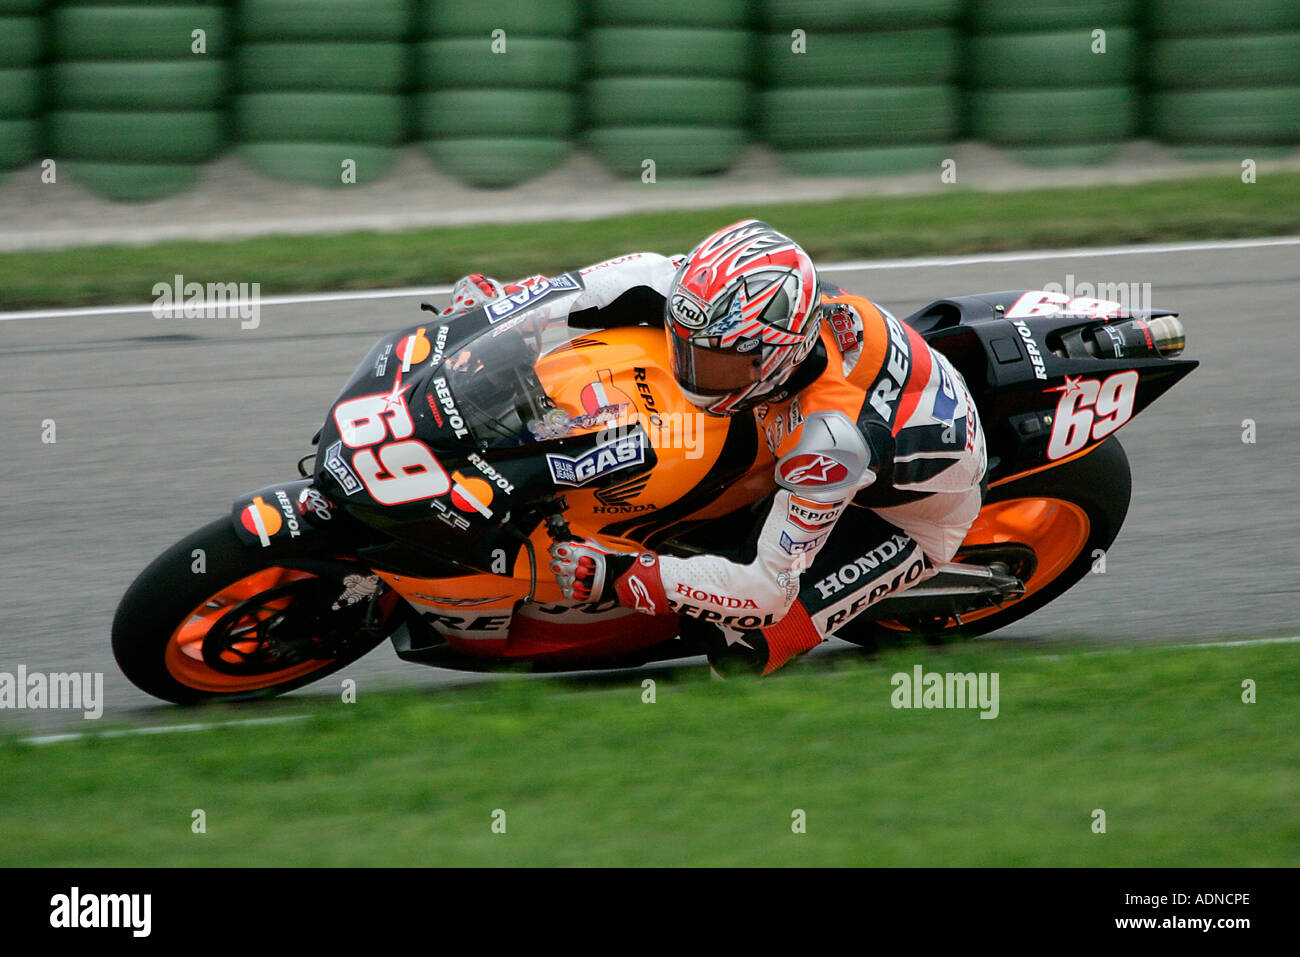 Nicky Hayden riding for Repsol Honda in 2005 Moto GP championship at ...